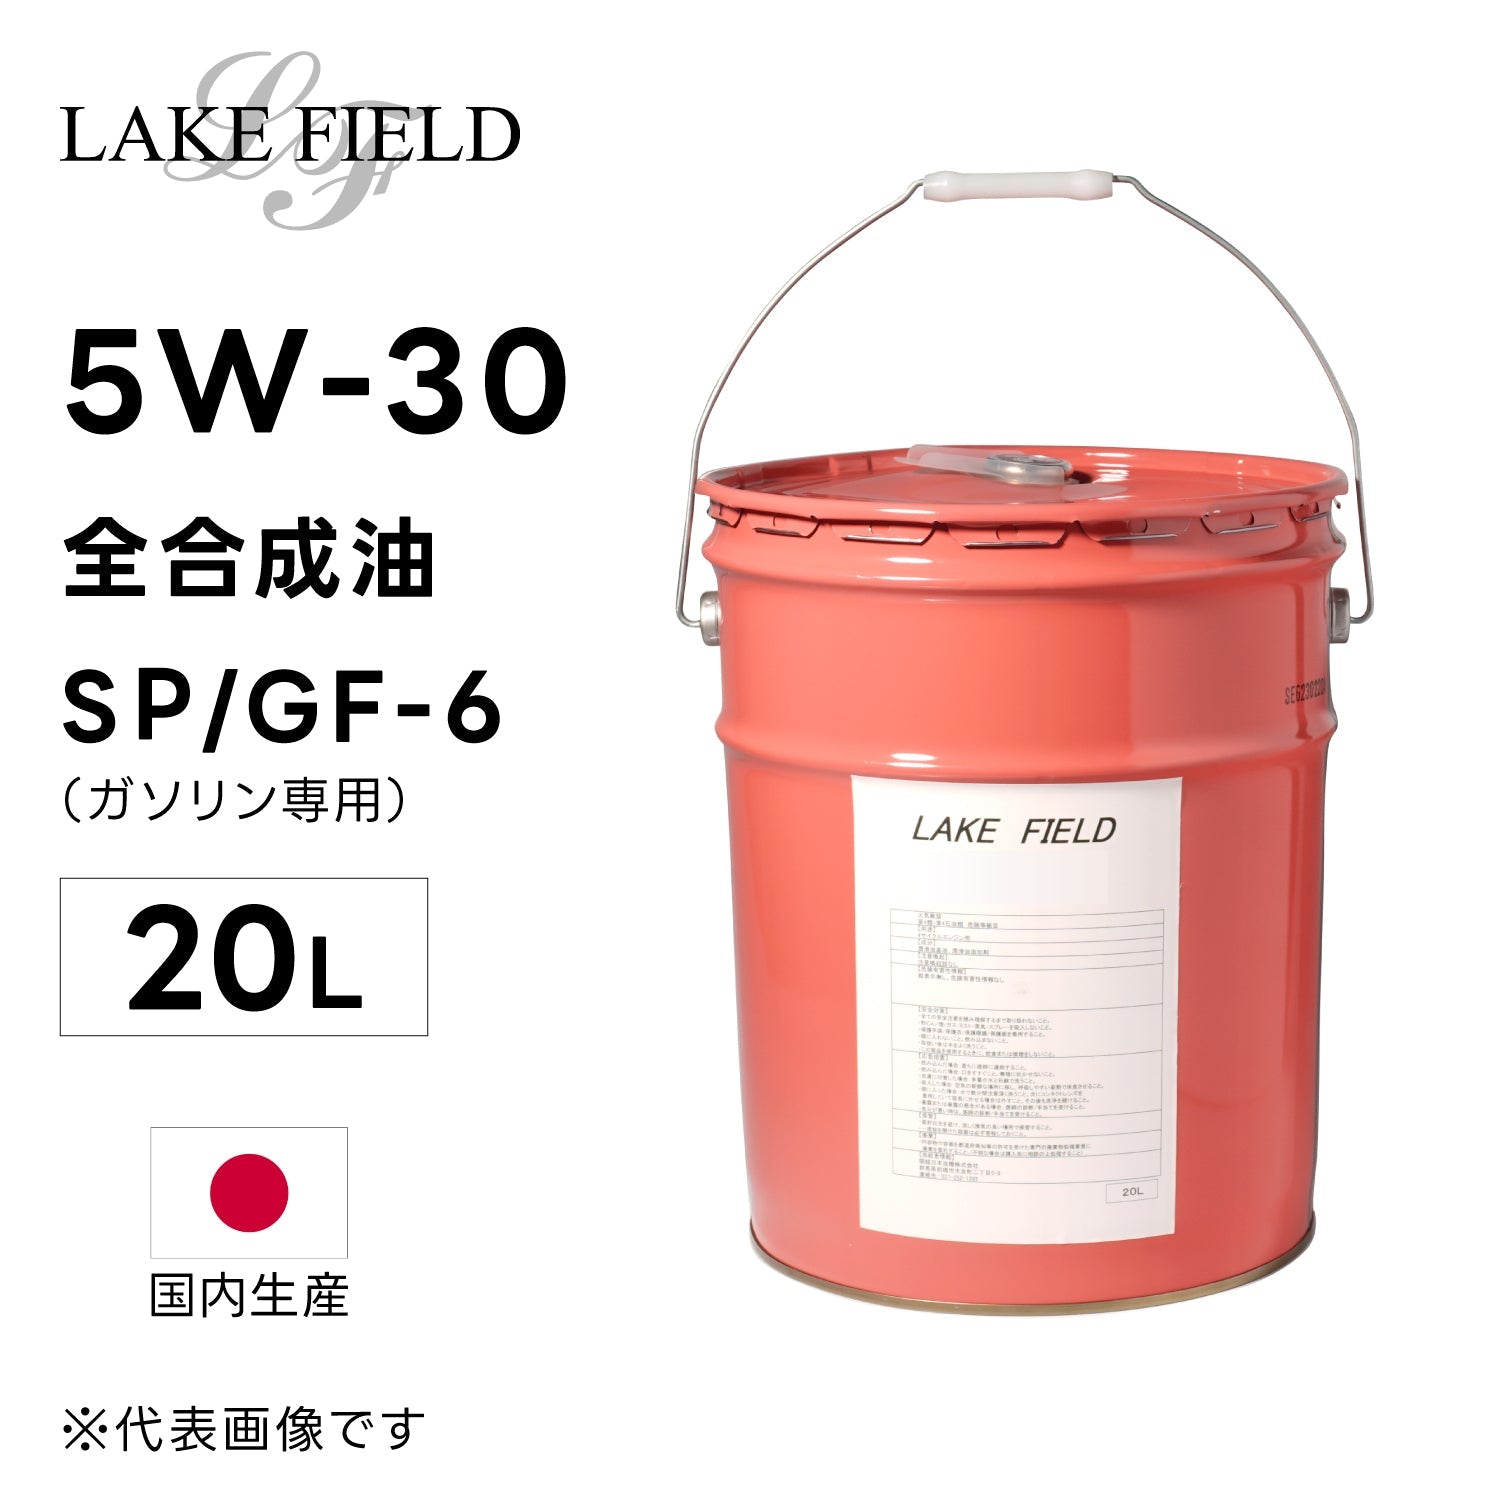 LAKE FIElD 5W-30 SP 全合成 エンジンオイル - メンテナンス用品